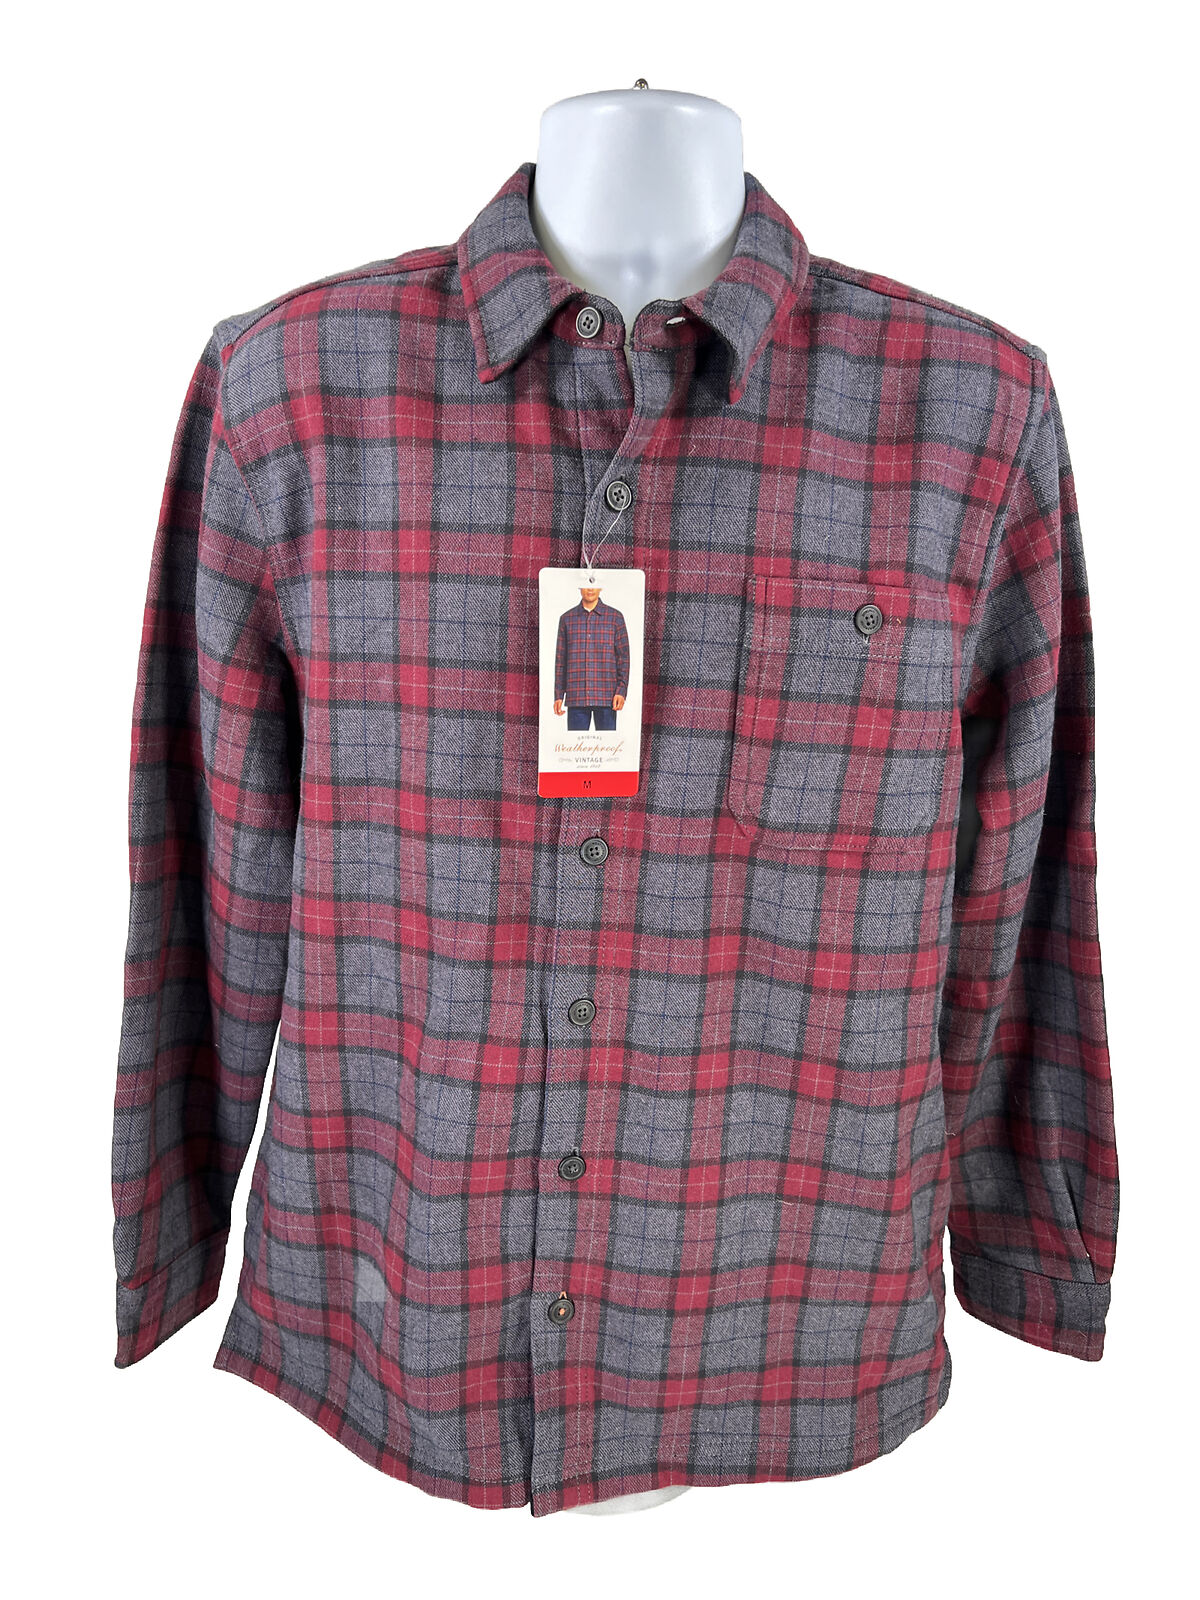 NEW Weatherproof Men's Red/Blue Plaid Fleece Lined Button Up Shirt - M